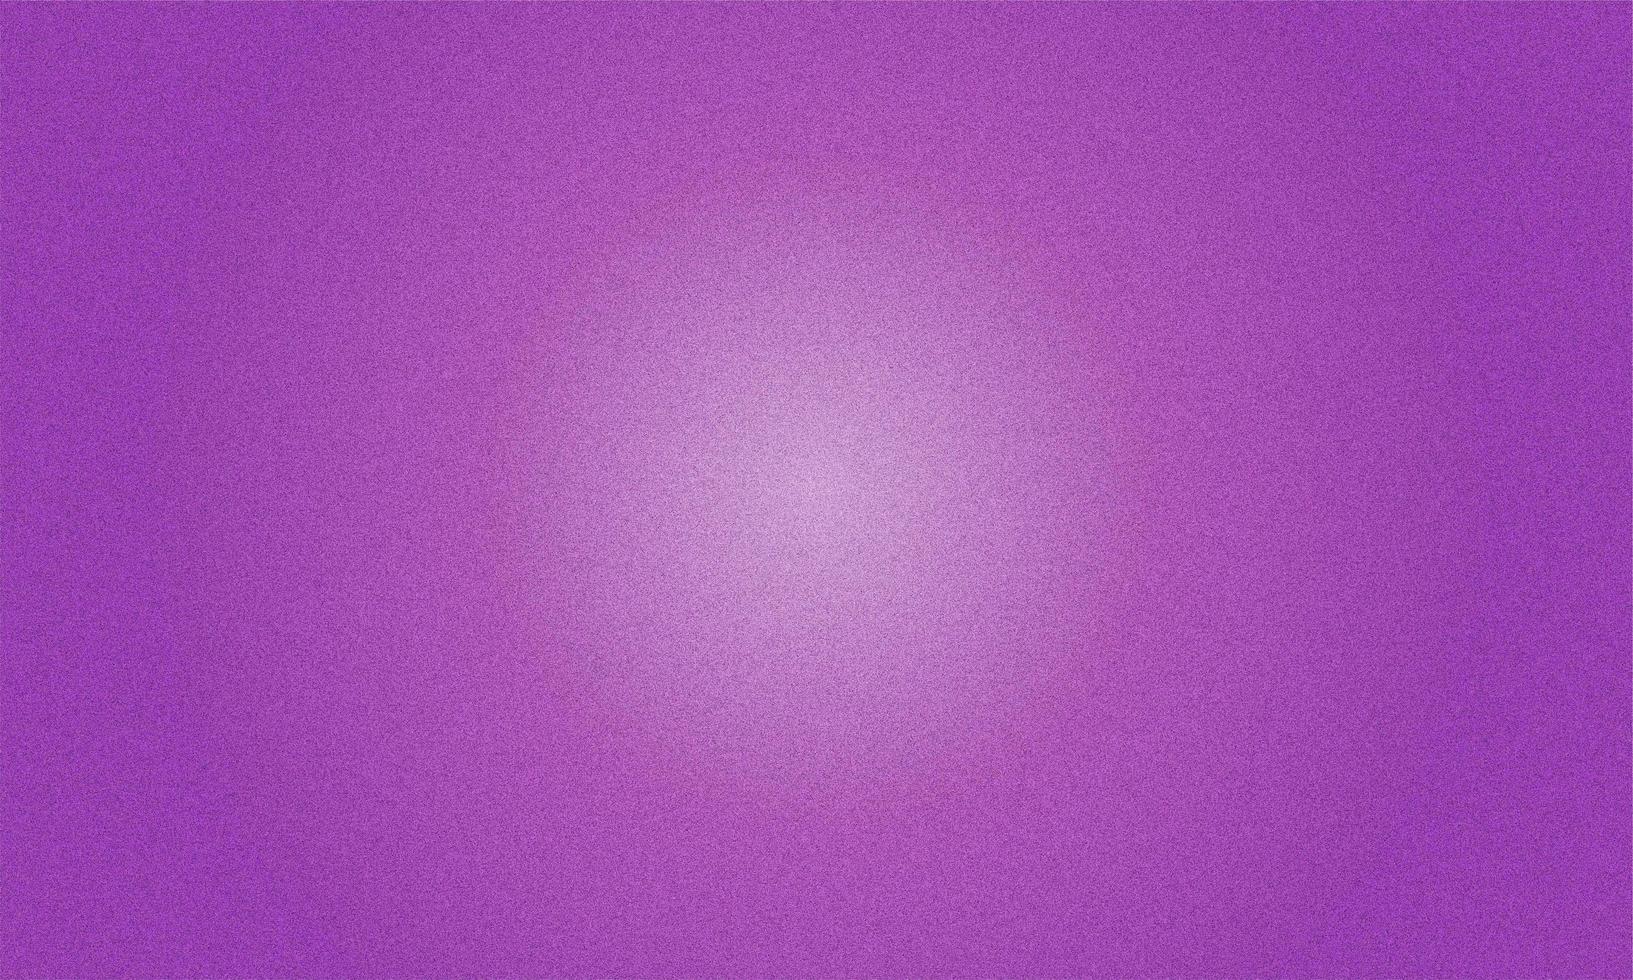 Blur Background  Gradient with Noise Grain Effect photo